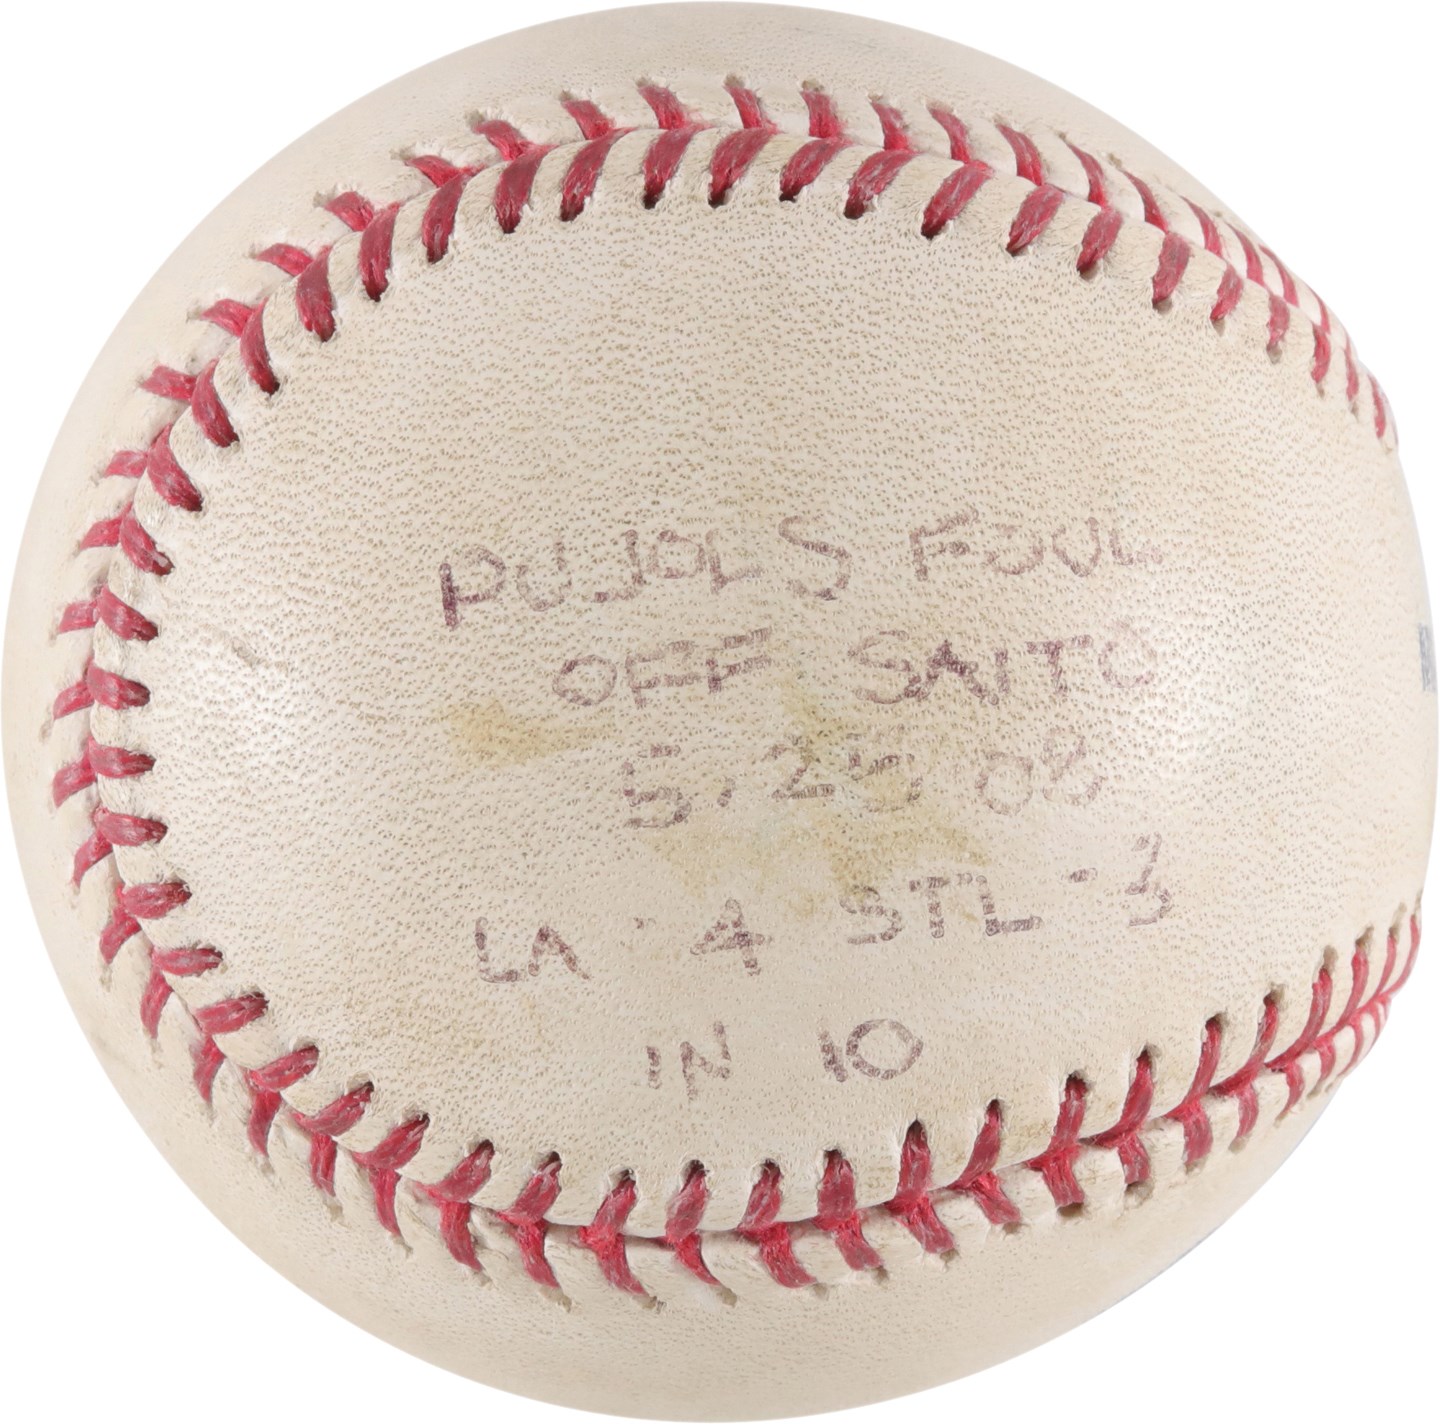 - 2008 Clayton Kershaw MLB Debut Game Used Baseball - Pujols Foul Ball (MEARS)